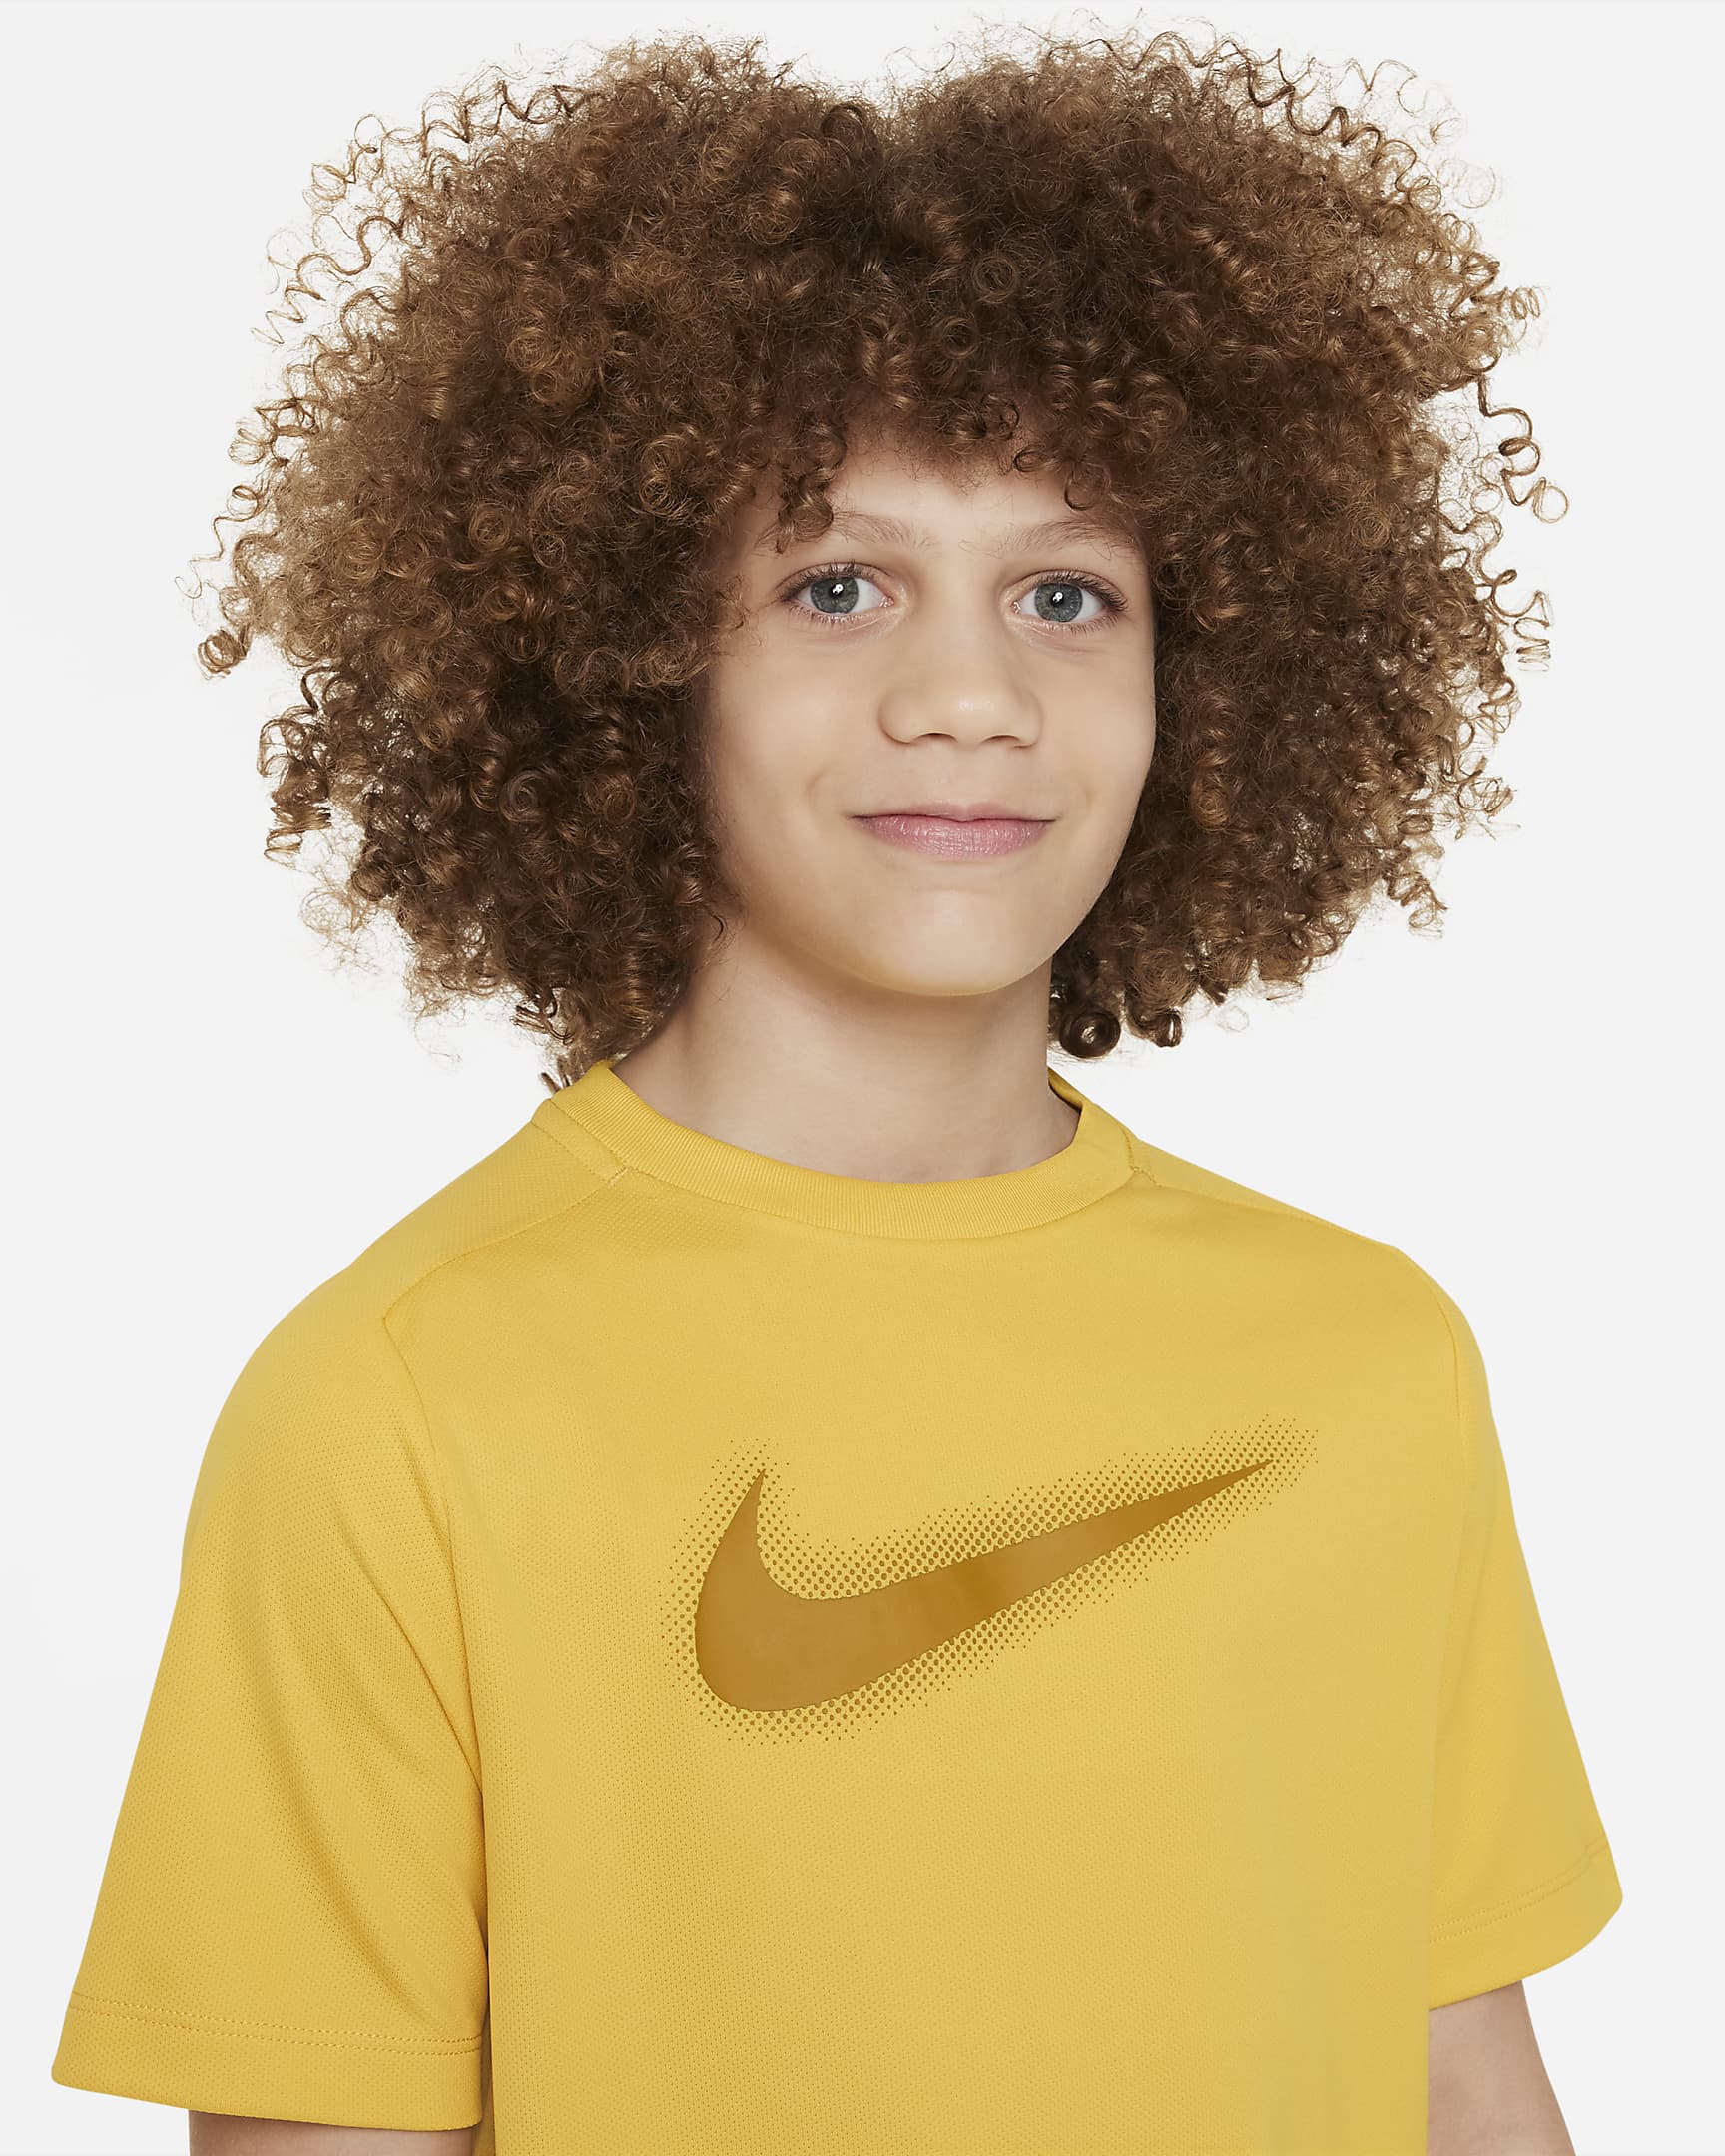 Nike Multi Big Kids' (Boys') Dri-FIT Graphic Training Top. Nike.com